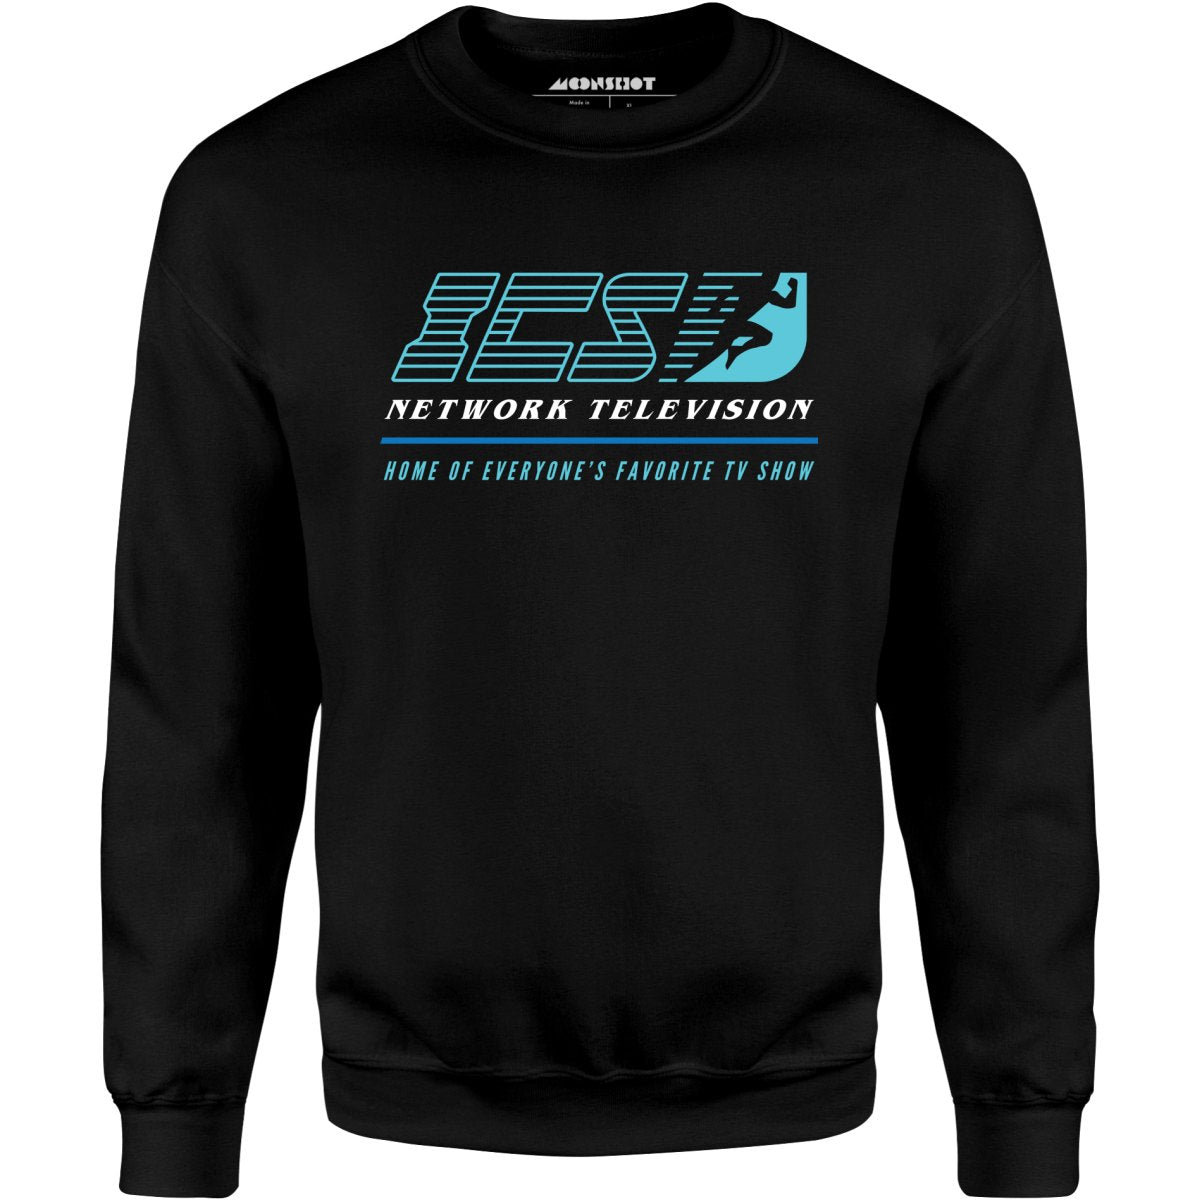 Running Man - ICS Network Television - Unisex Sweatshirt